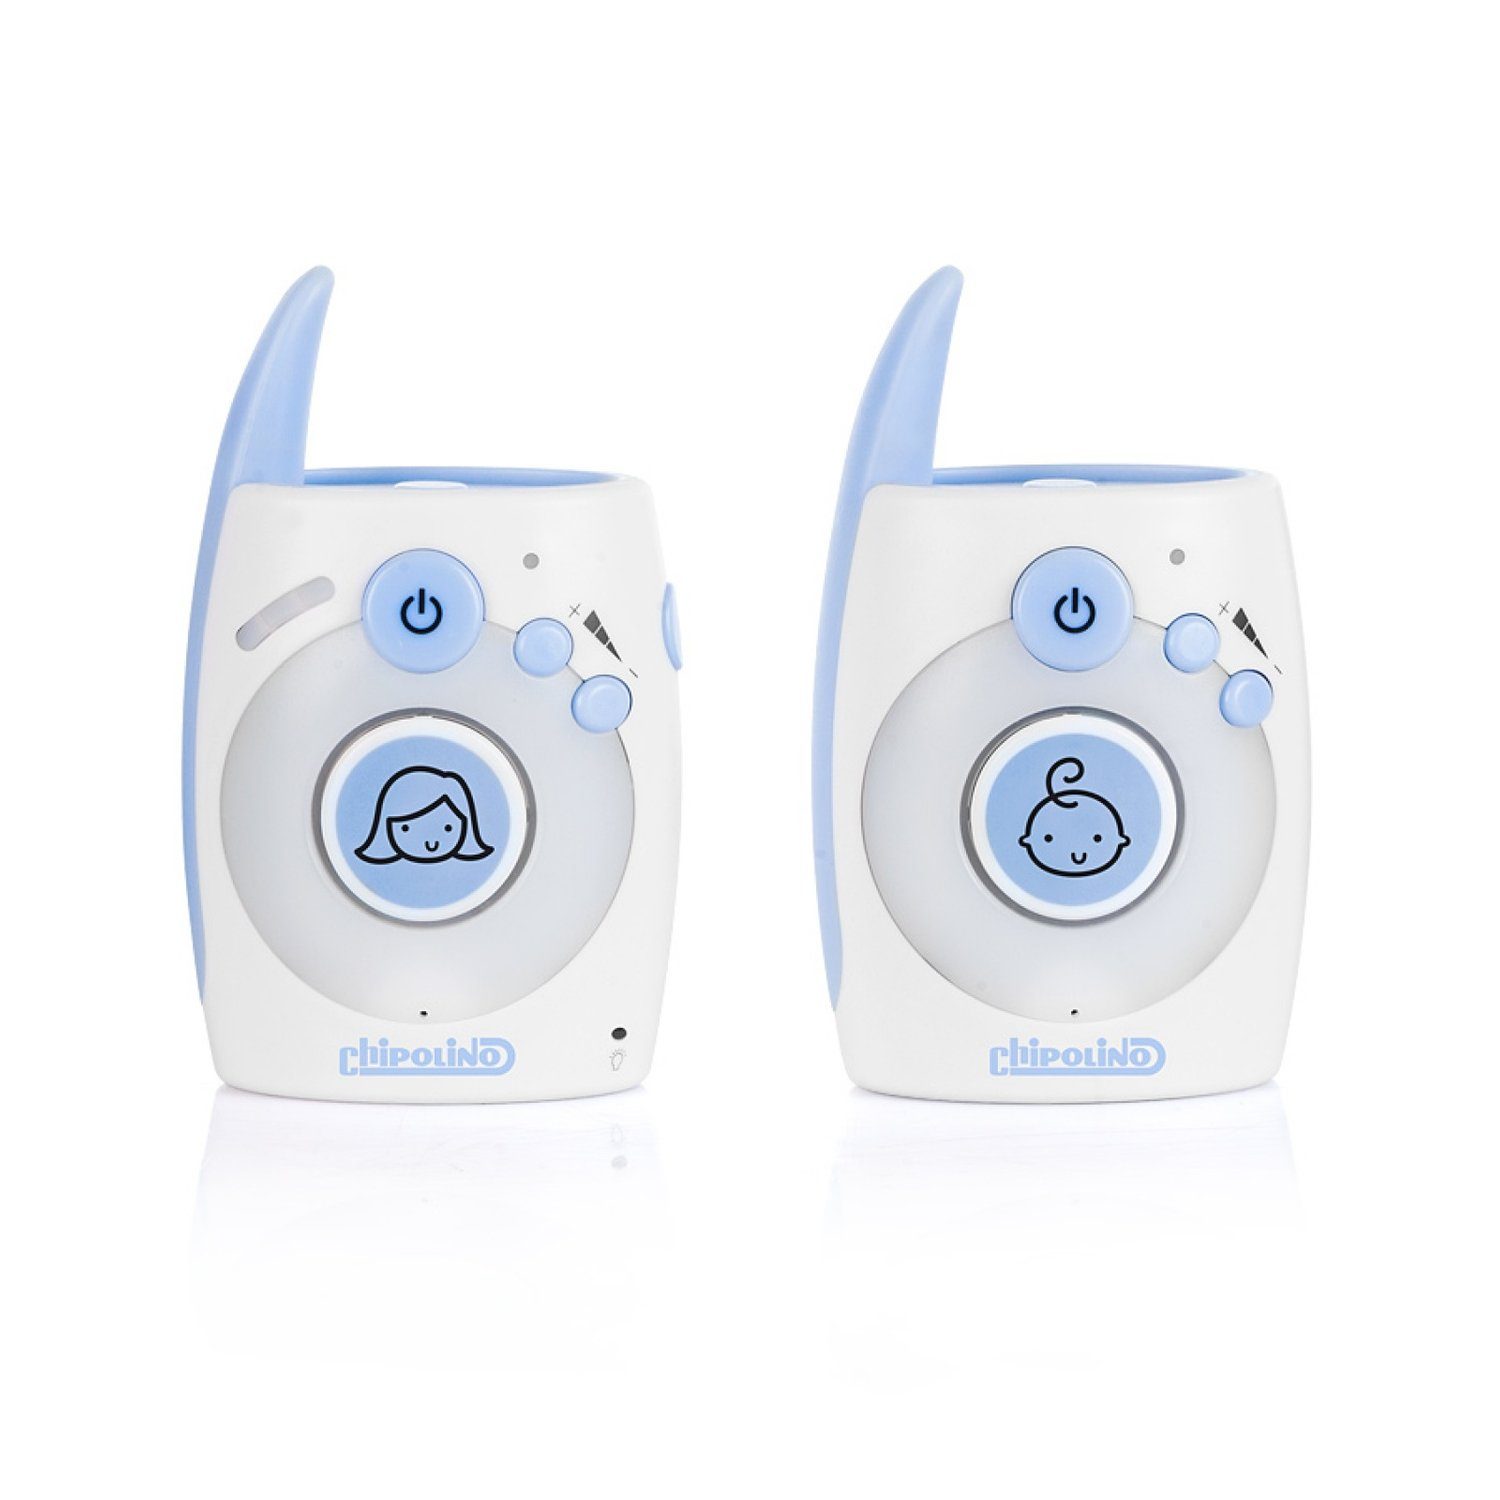 Chipolino Babyphone Babyphone Astro Reichweite, Zweiwege-Kommunikation, blau USB Adapter m 300 USB-Adapter